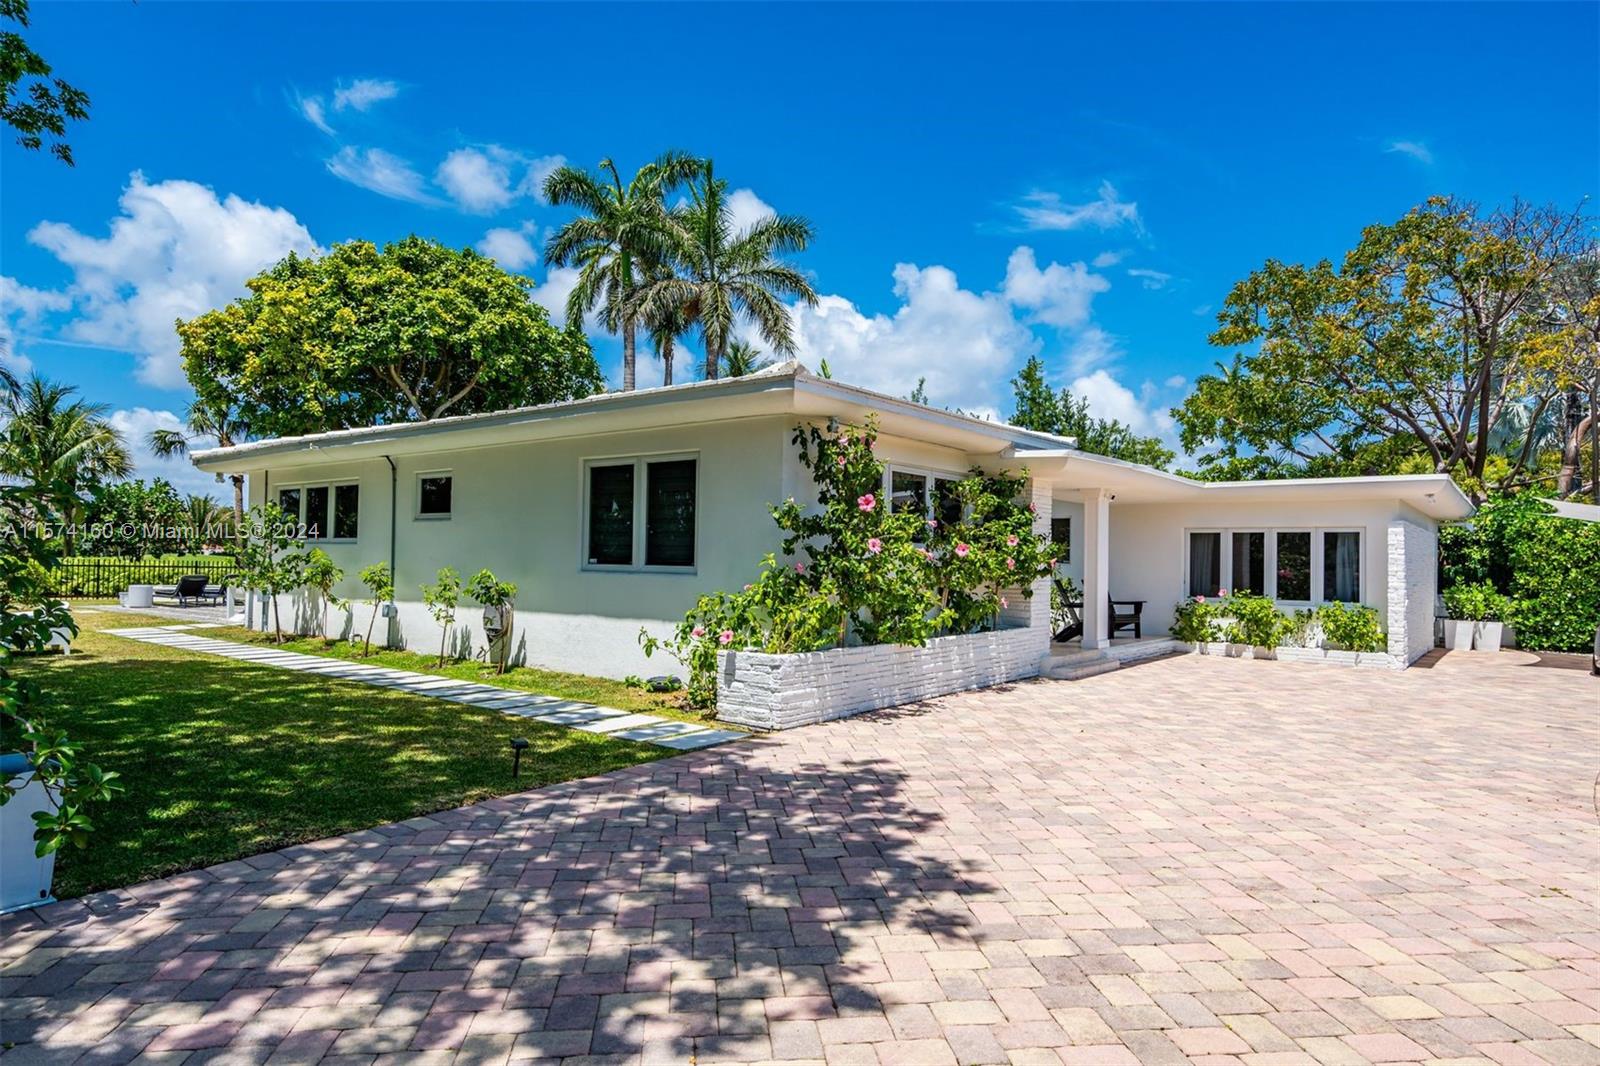 Property for Sale at 6100 La Gorce Dr, Miami Beach, Miami-Dade County, Florida - Bedrooms: 4 
Bathrooms: 3  - $4,500,000